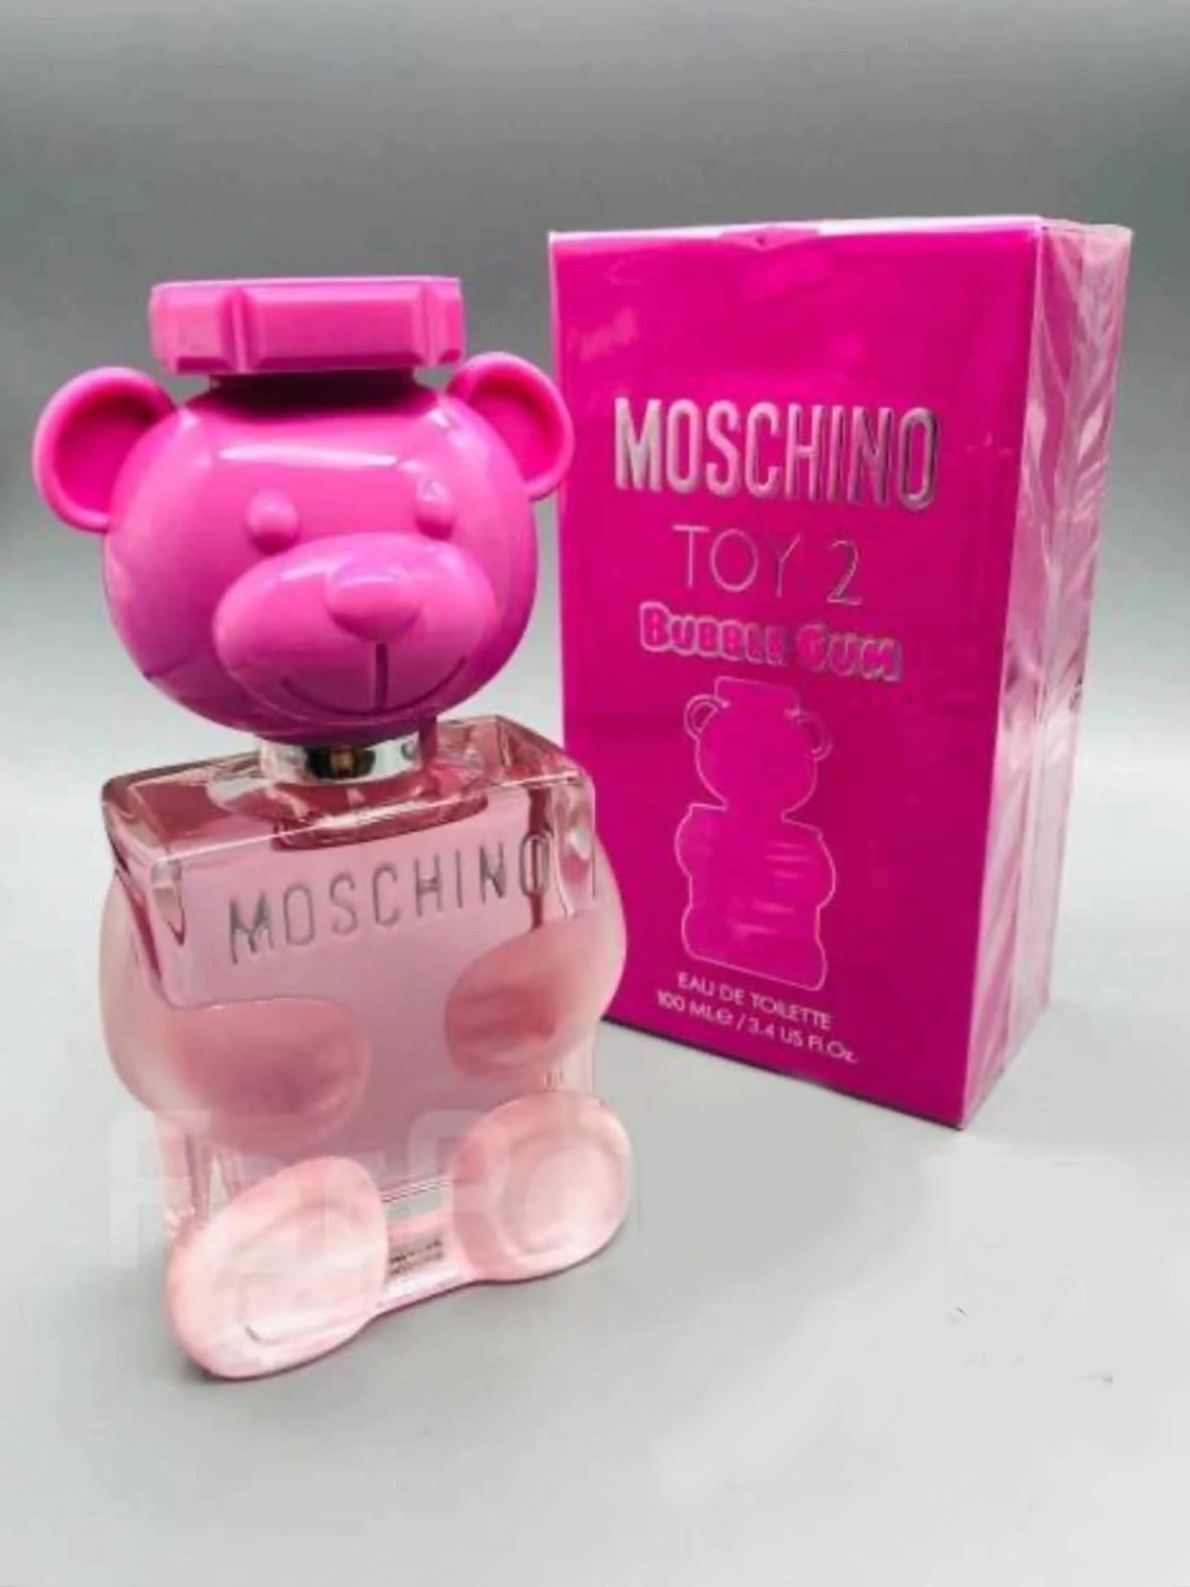 Москино мишка оригинал. Moschino/ Toy 2 Bubble Gum/ Москино бабл гам 100 мл. Moschino духи Bubble Gum. Moschino Toy 2 Bubble Gum туалетная вода 100 мл. Moschino Toy 2 100 ml.